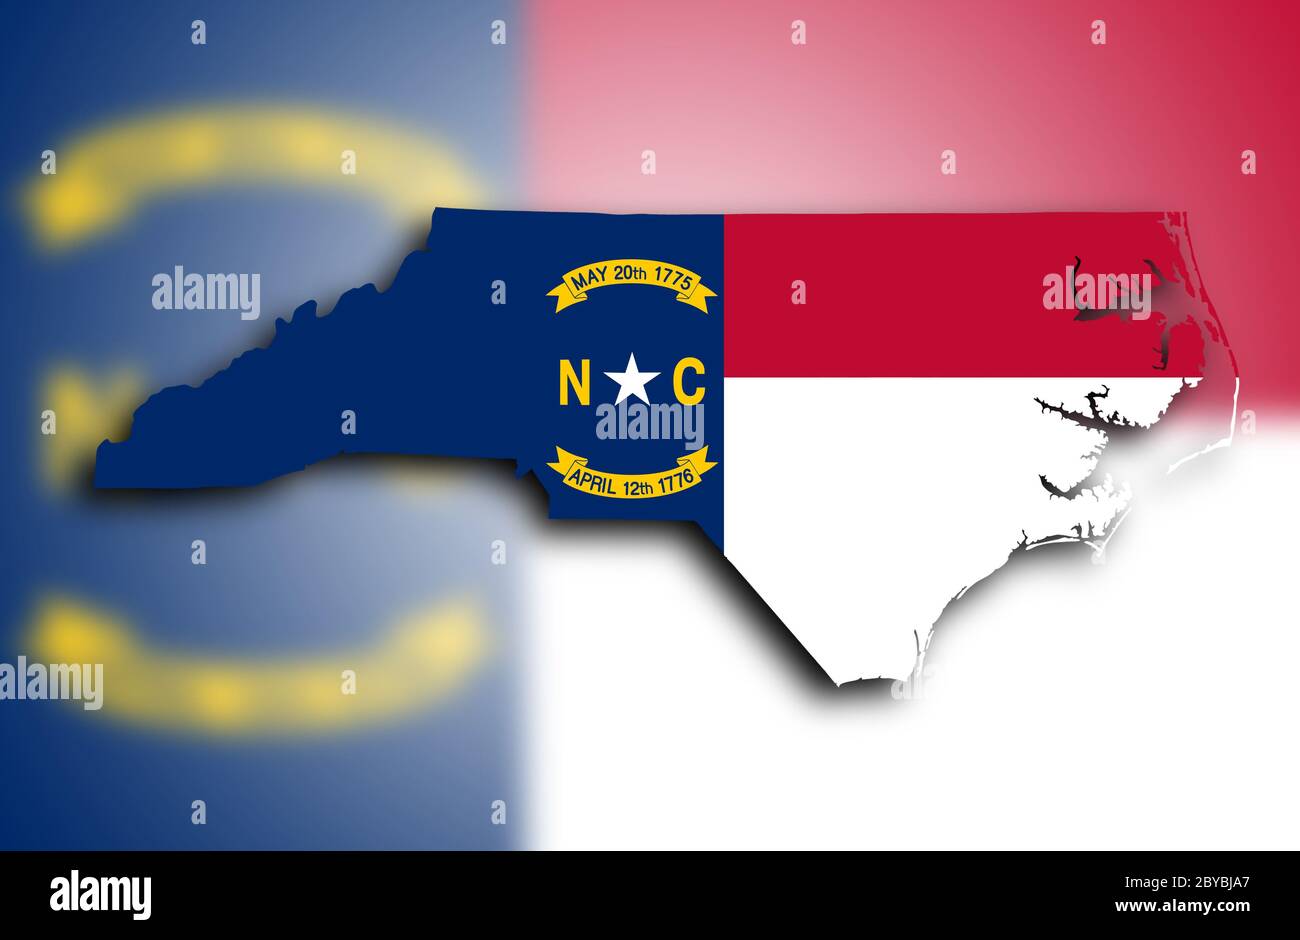 Map Of North Carolina 2BYBJA7 